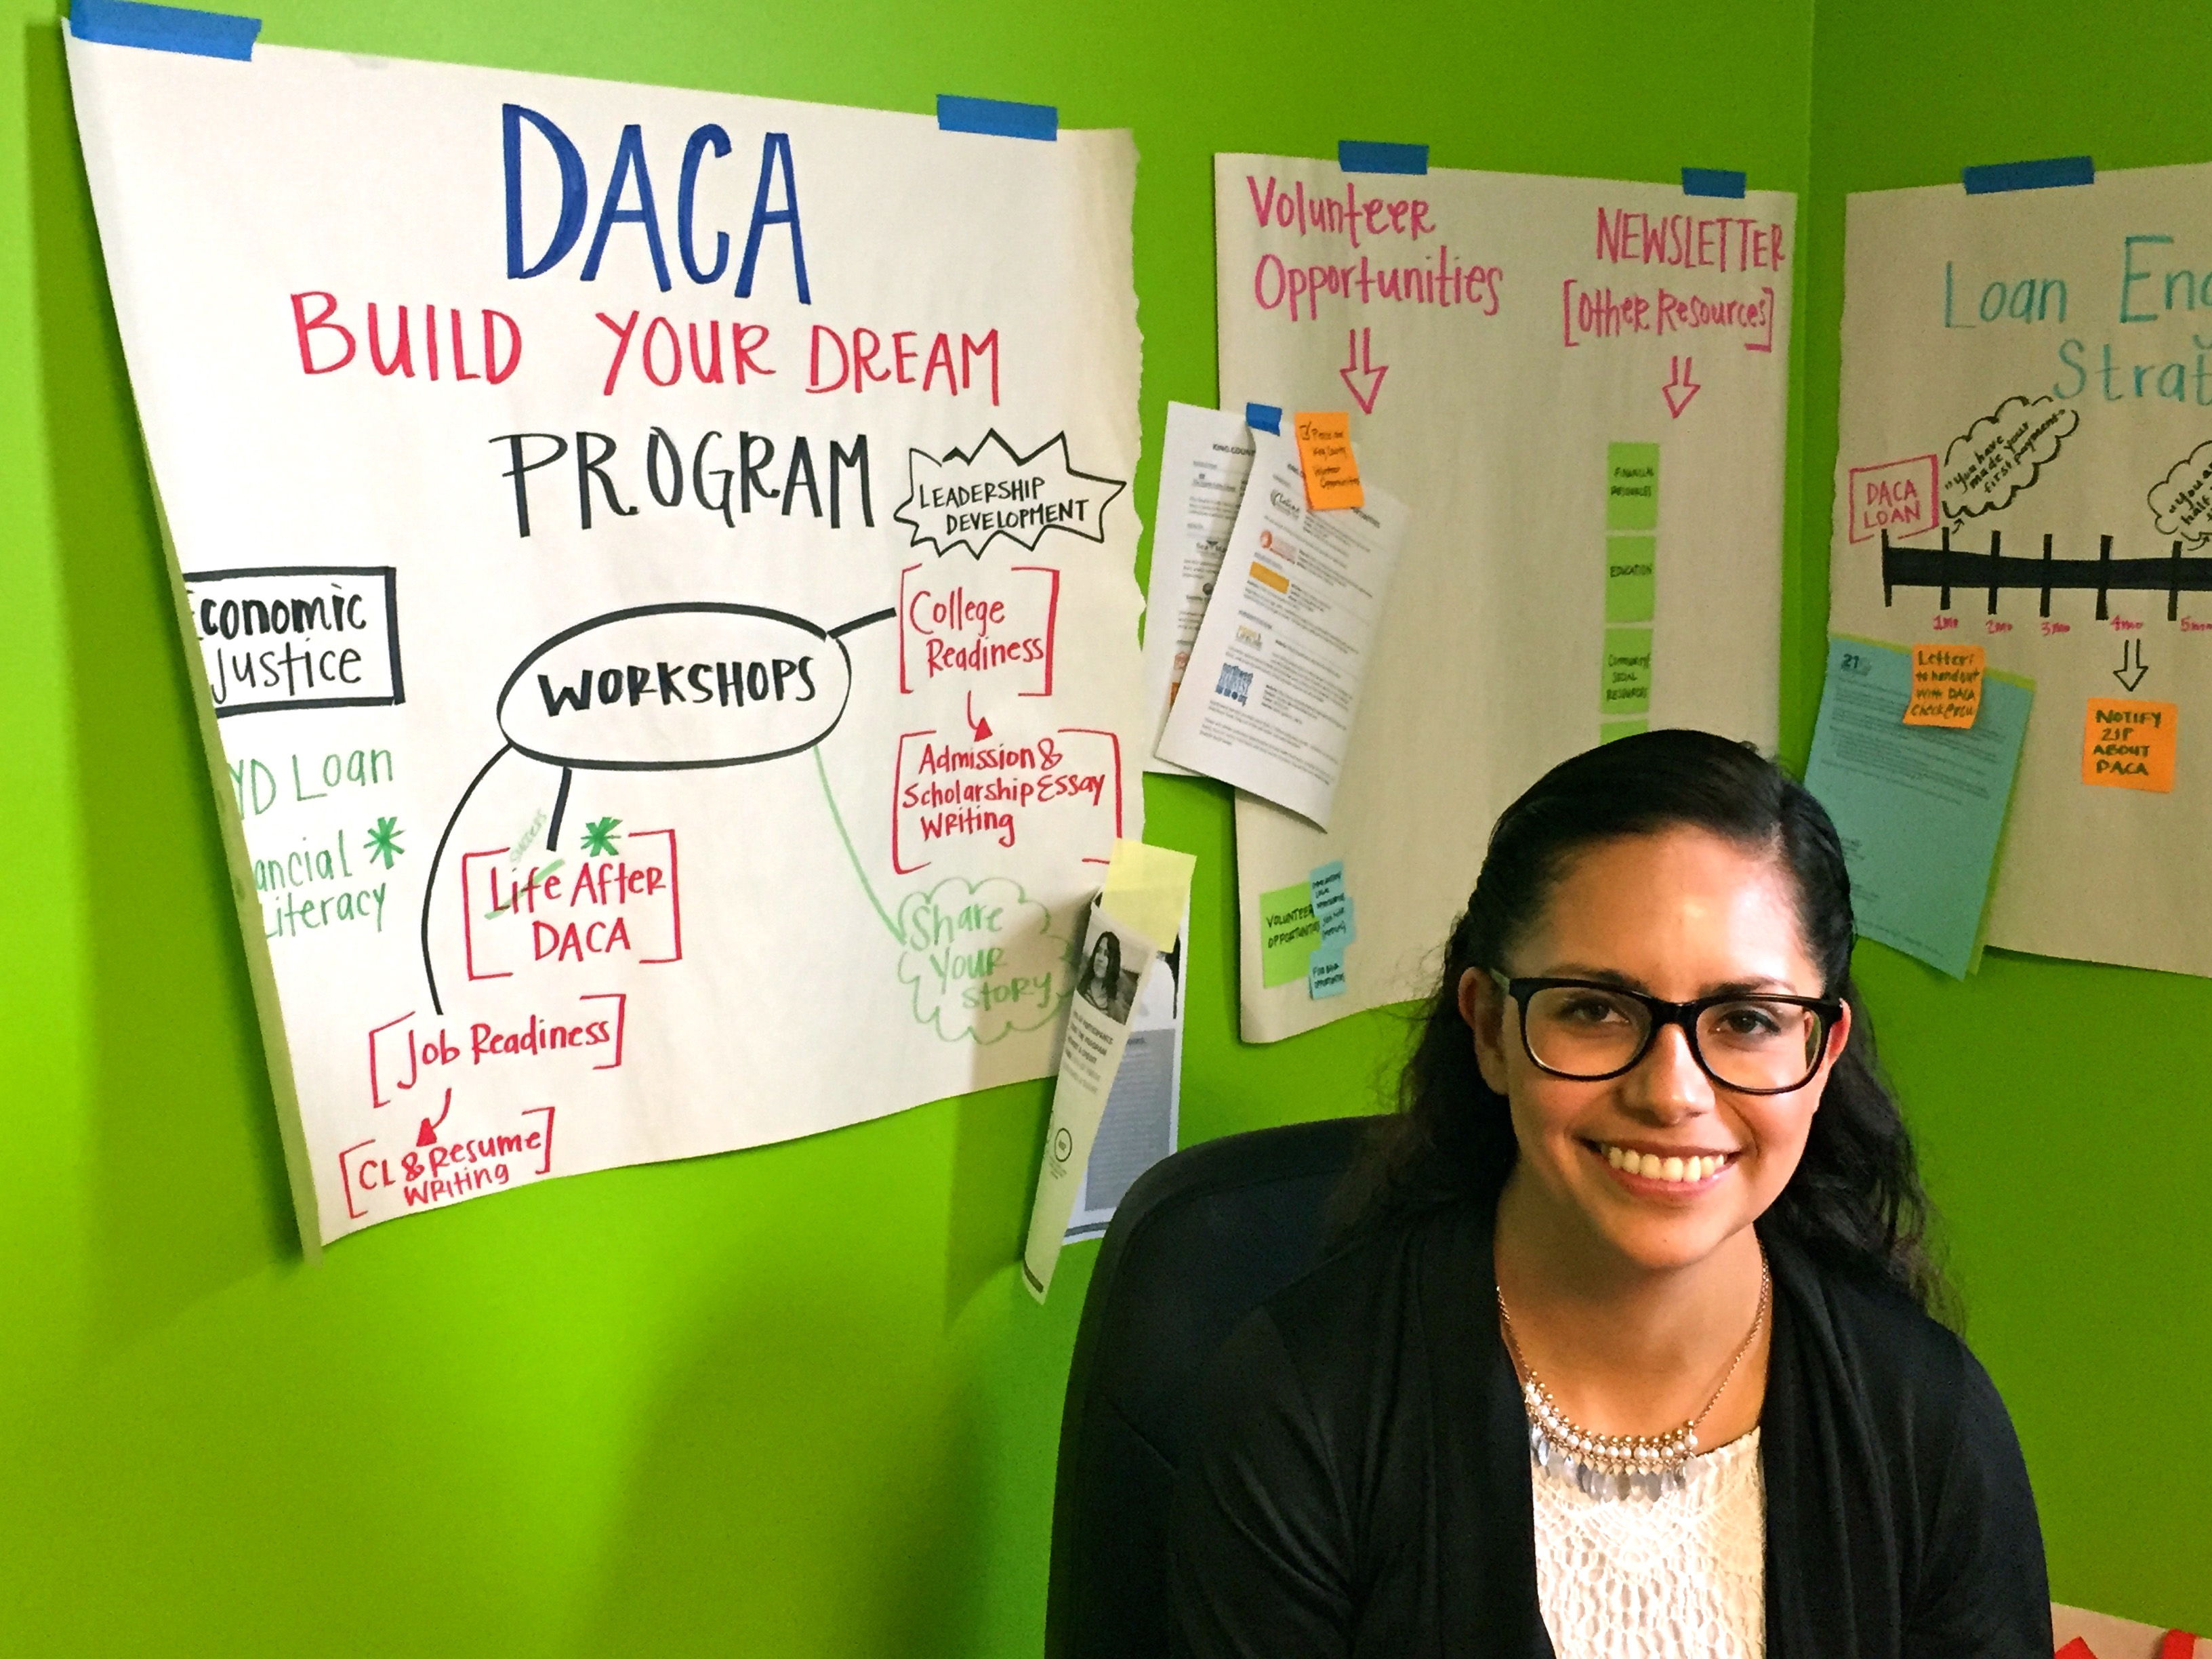 21Progress works to empower undocumented community through leadership